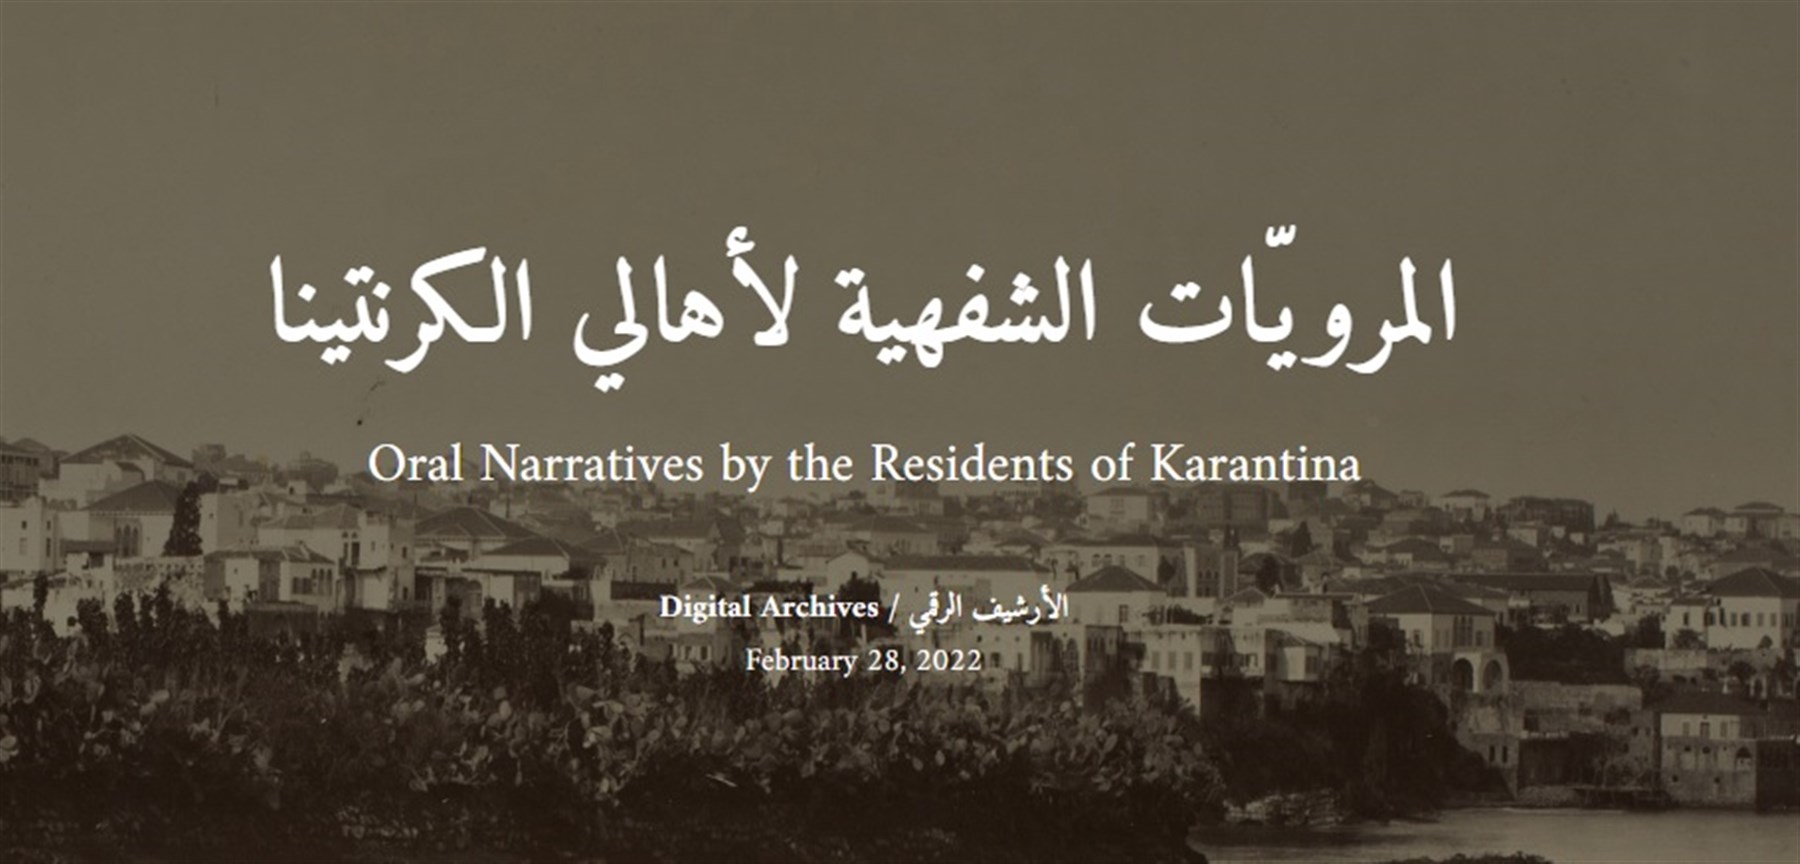 Oral Narratives by the Residents of Karantina